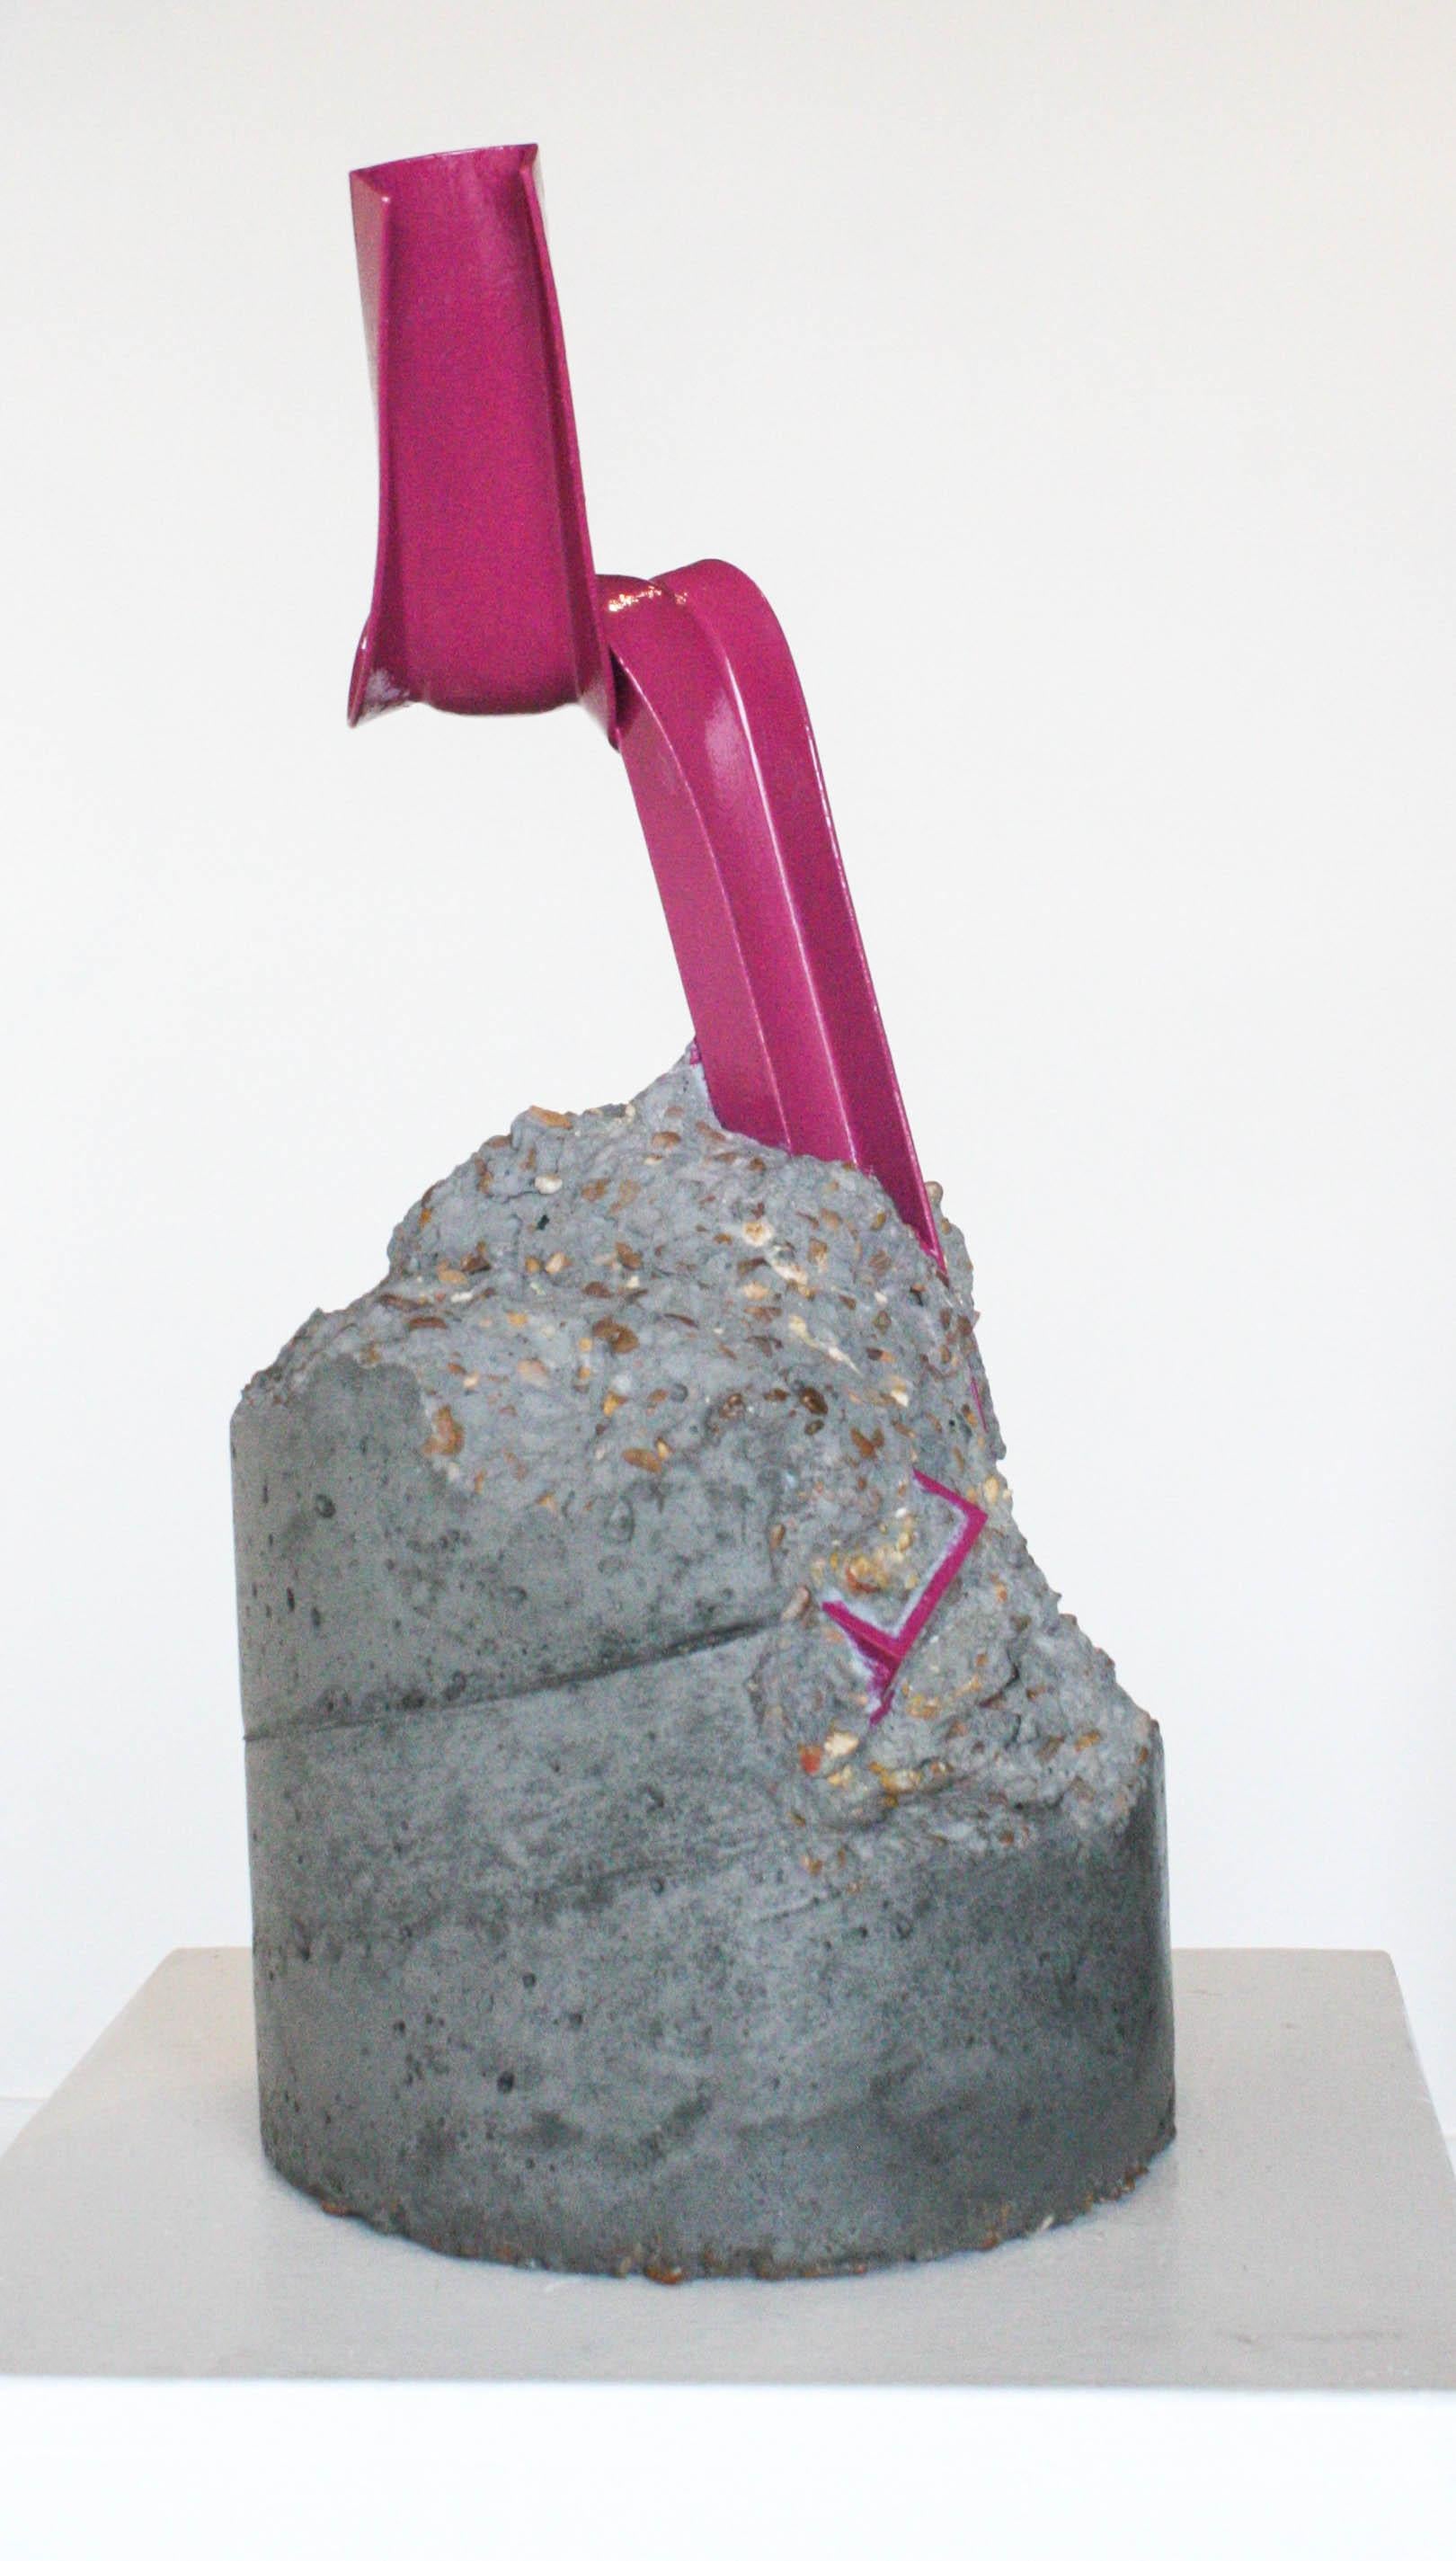 Pinky - Sculpture by Desmond Lewis